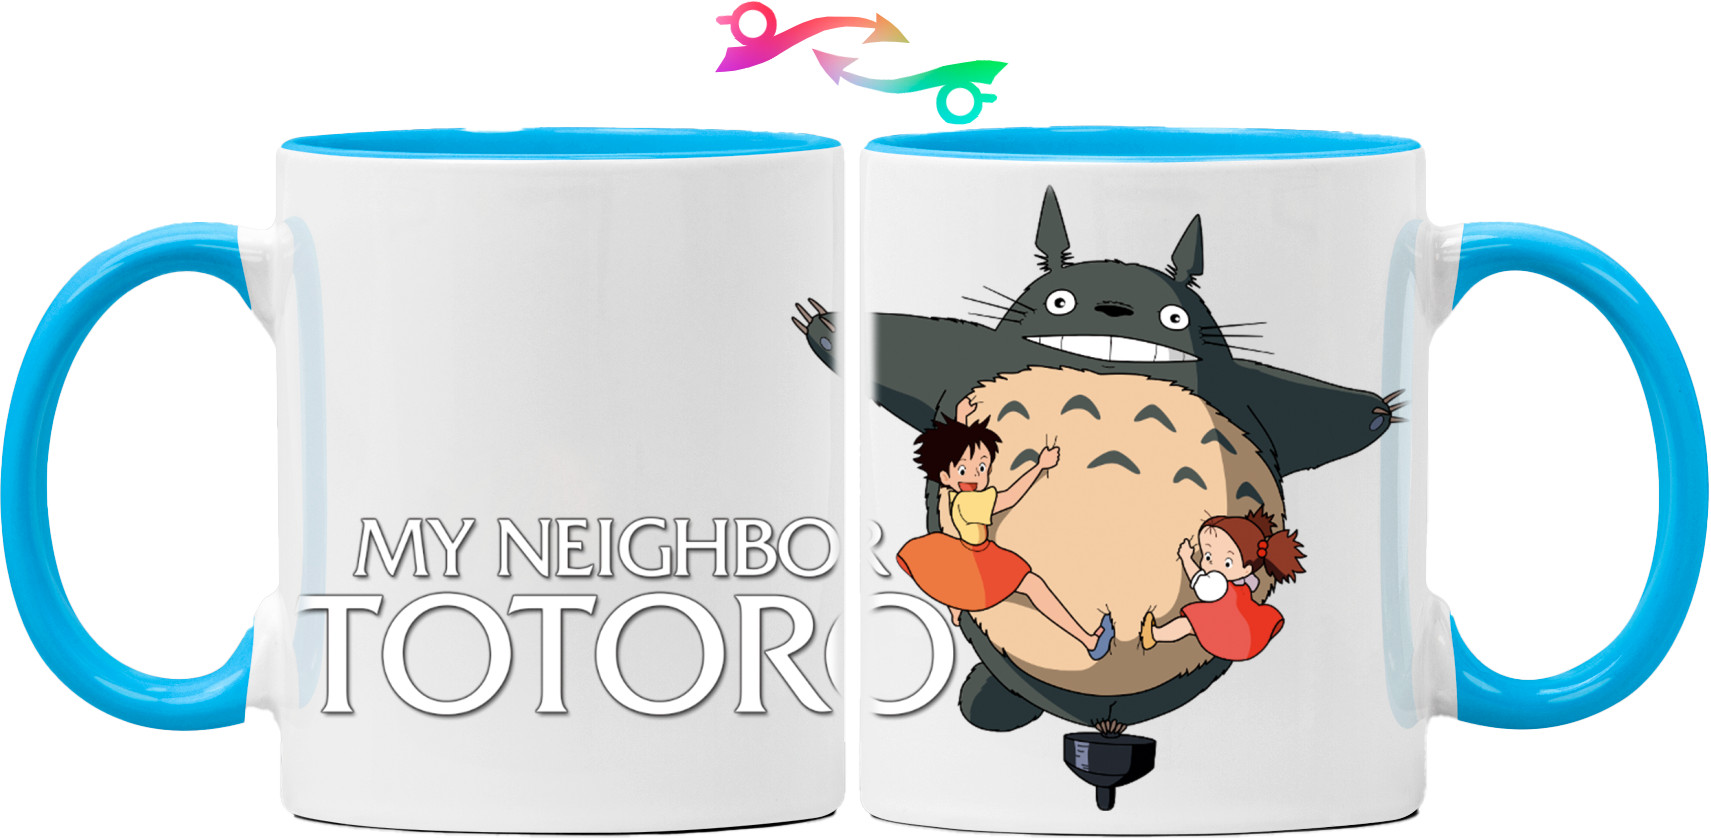 My neighbor Totoro logo